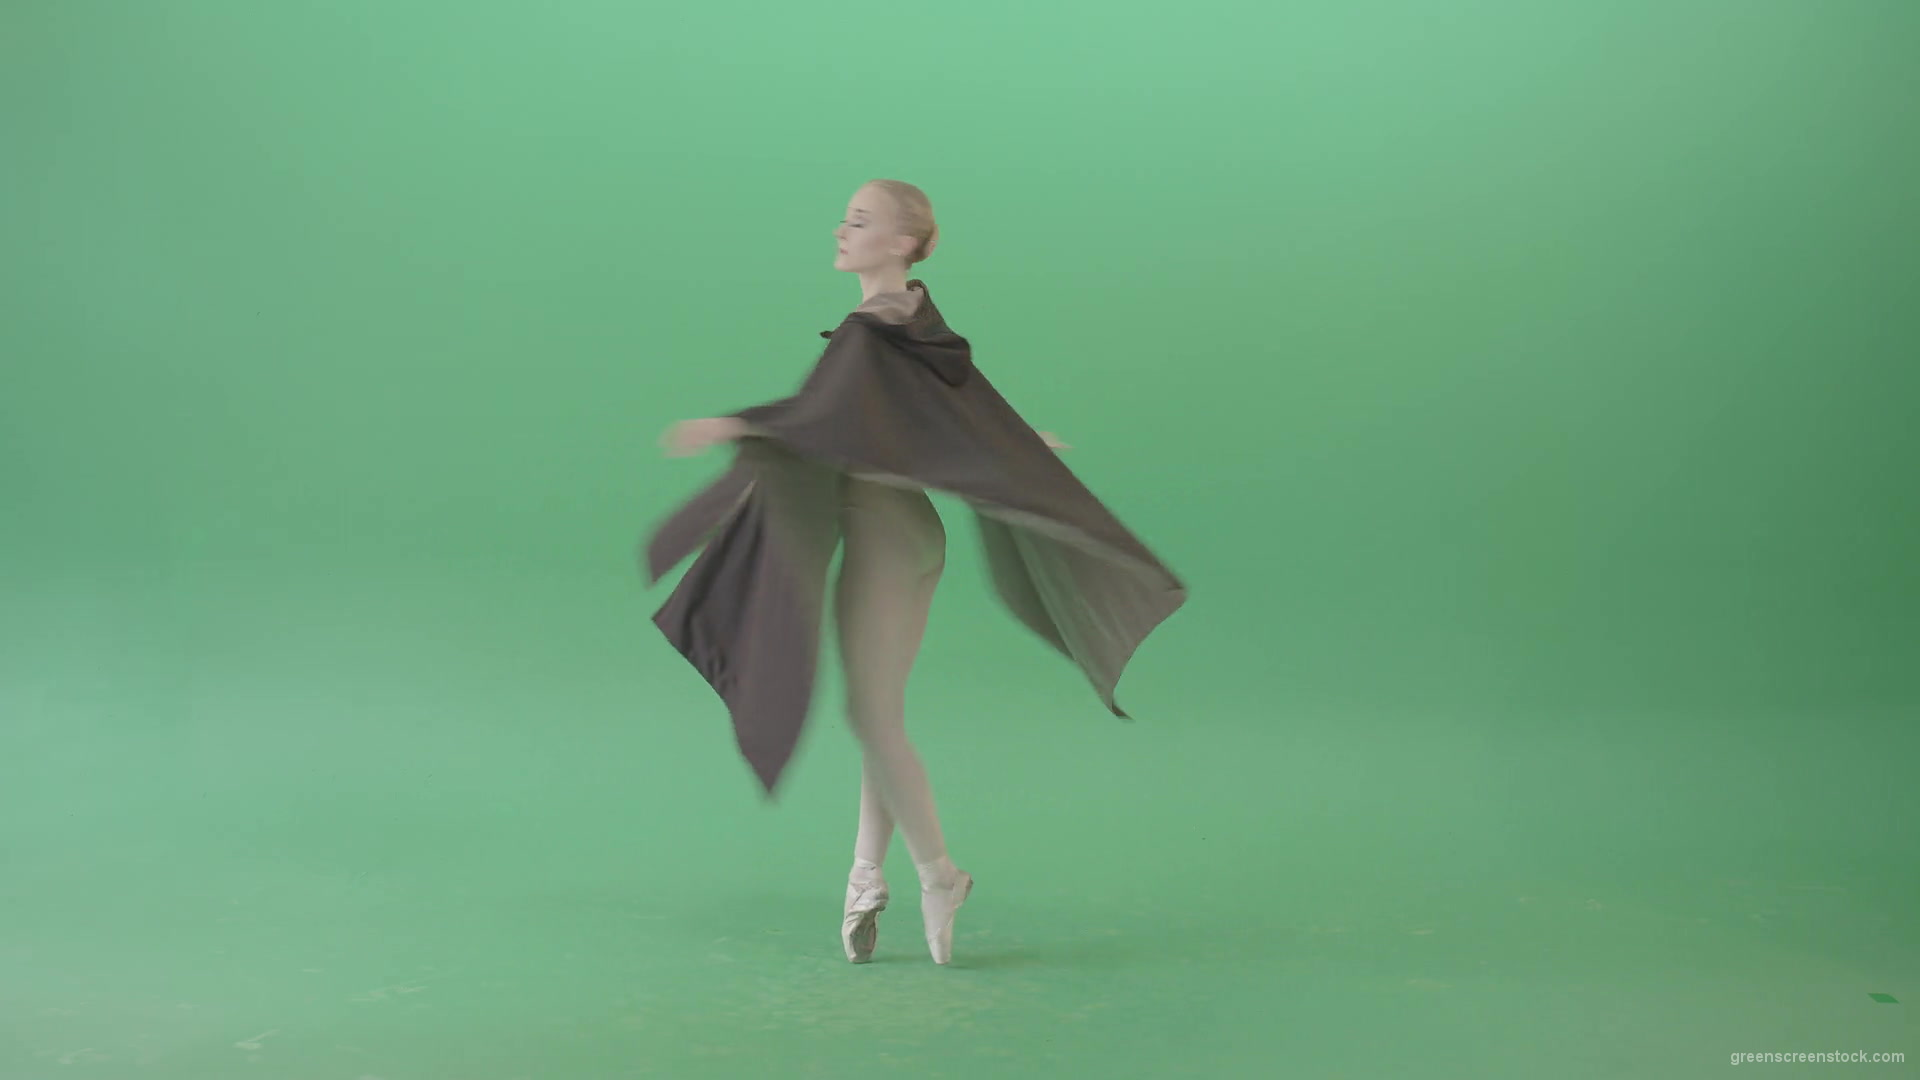 Green-Screen-Ballet-Girl-spinning-in-black-Mantle-cloak-4K-Video-Footage-1920_007 Green Screen Stock